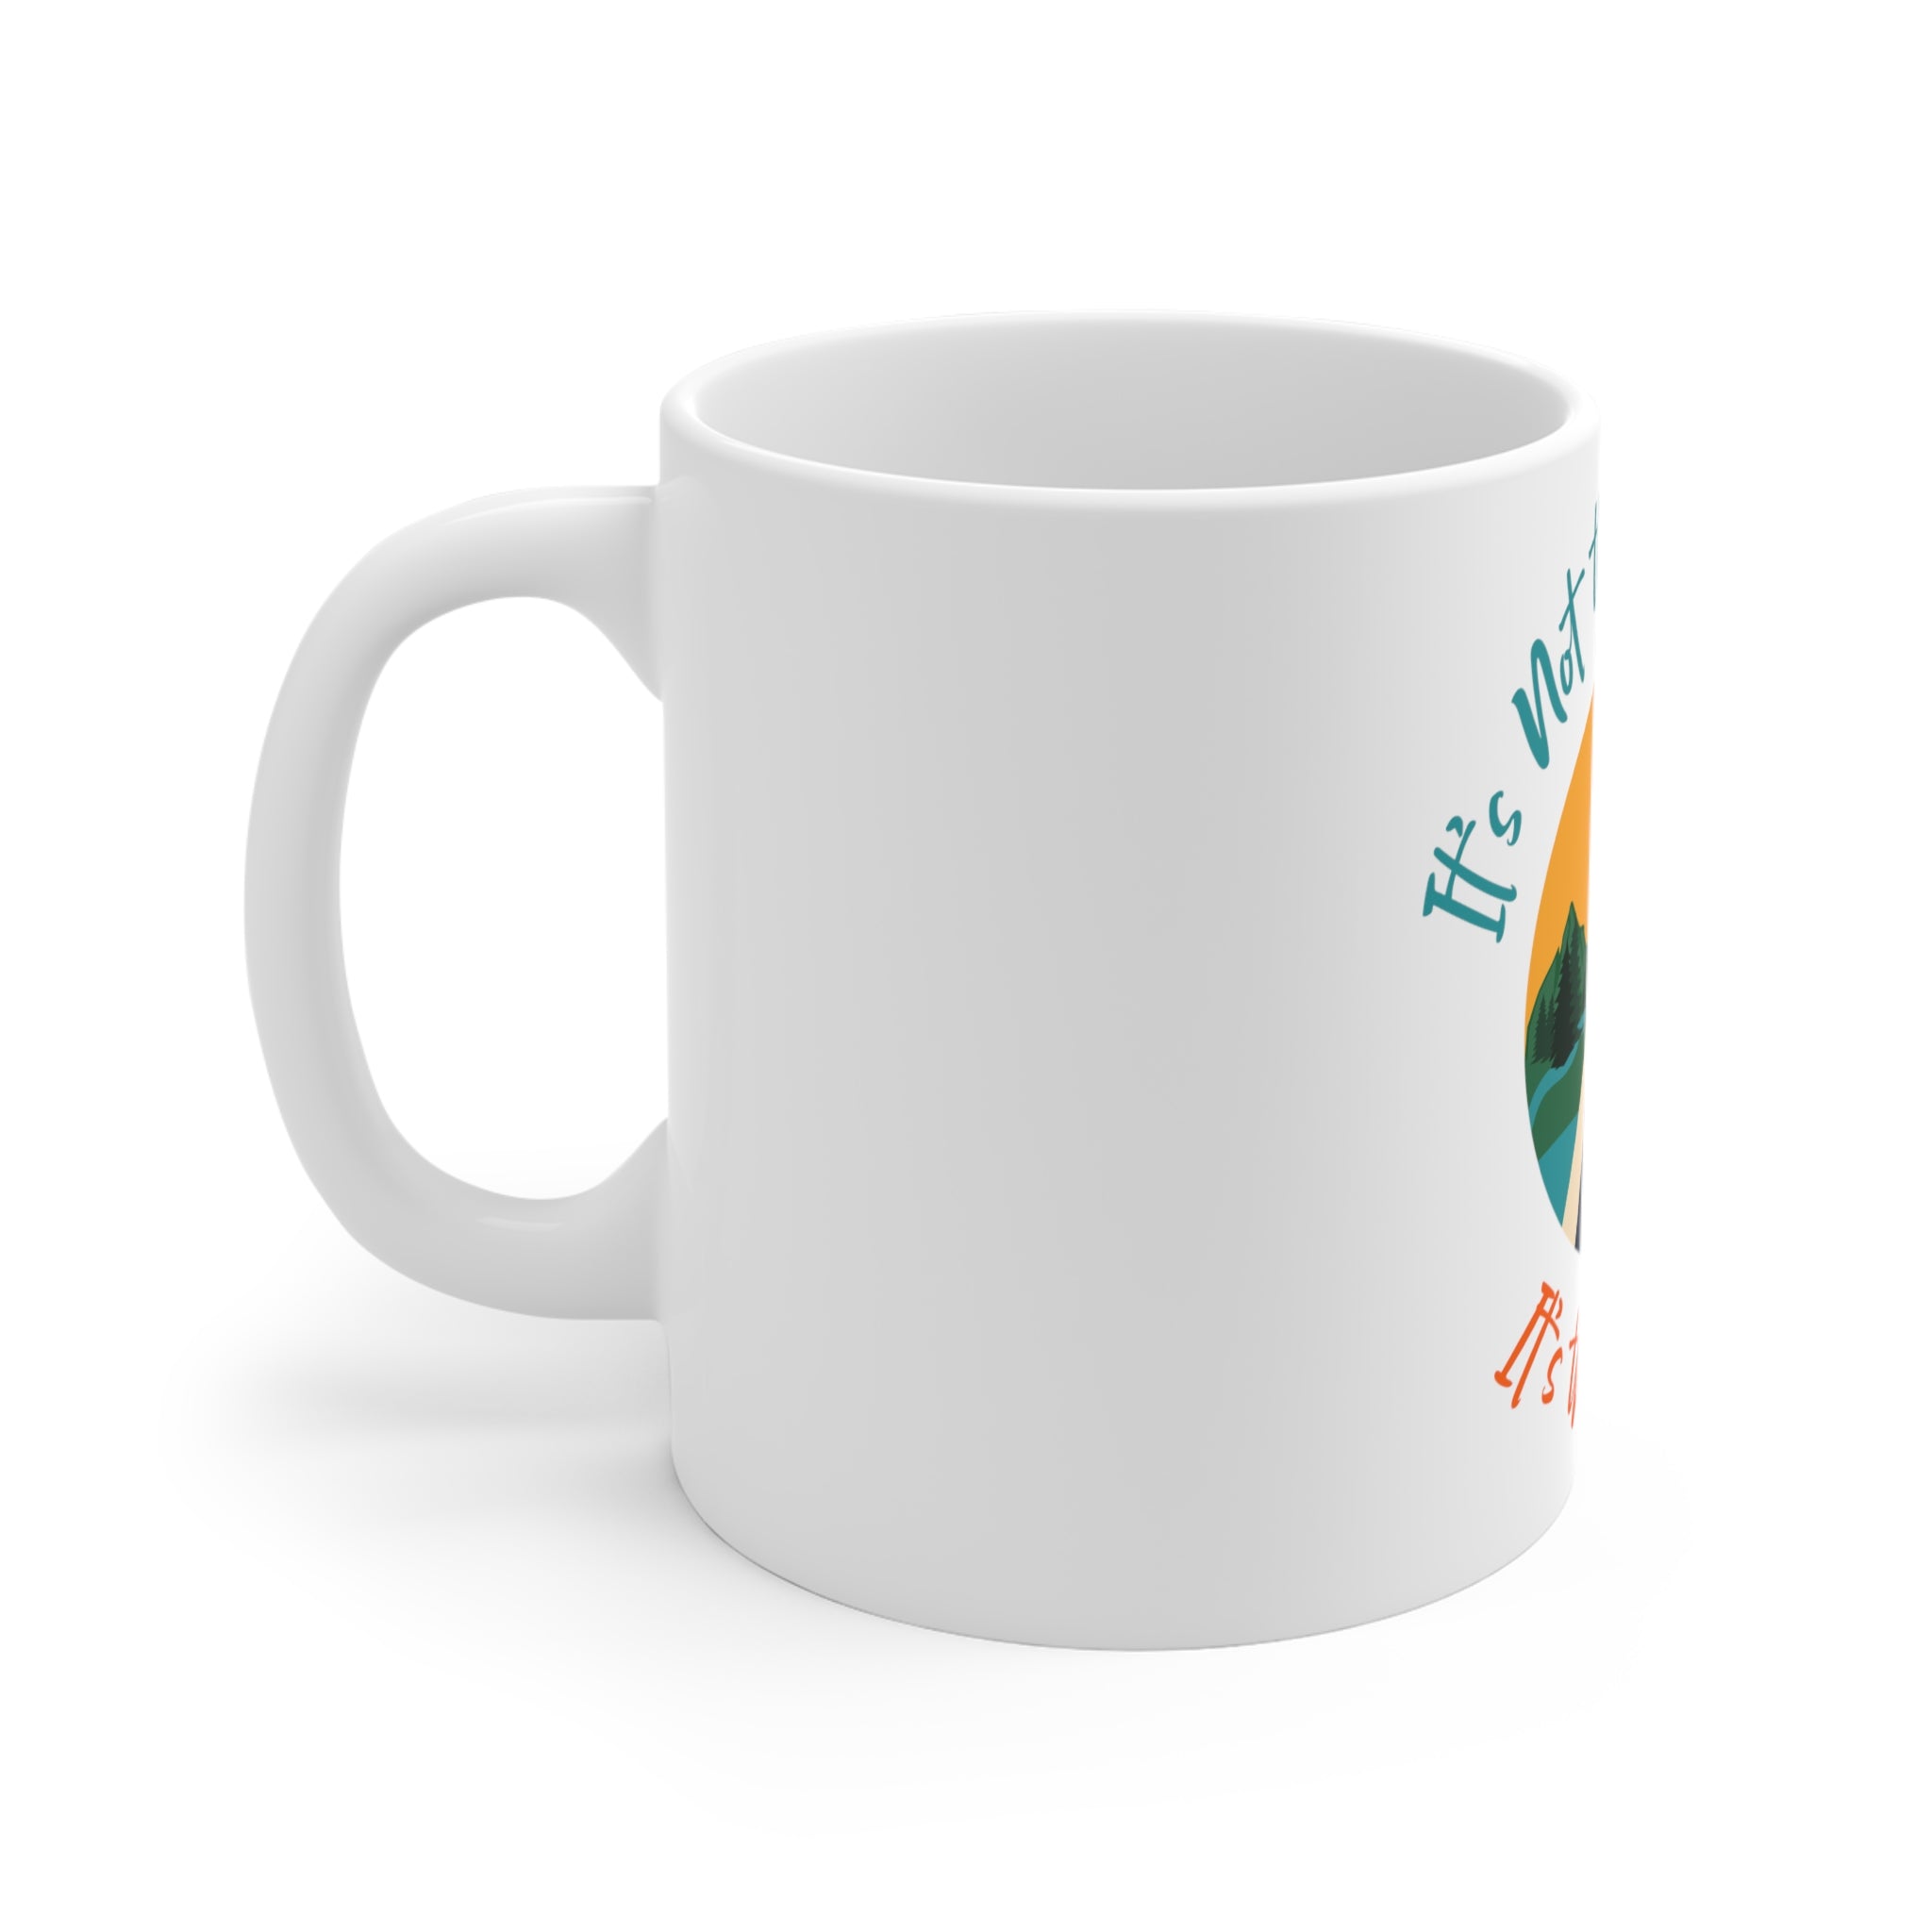 Daily vibes - Accent Coffee Mug, 11oz (Europe)